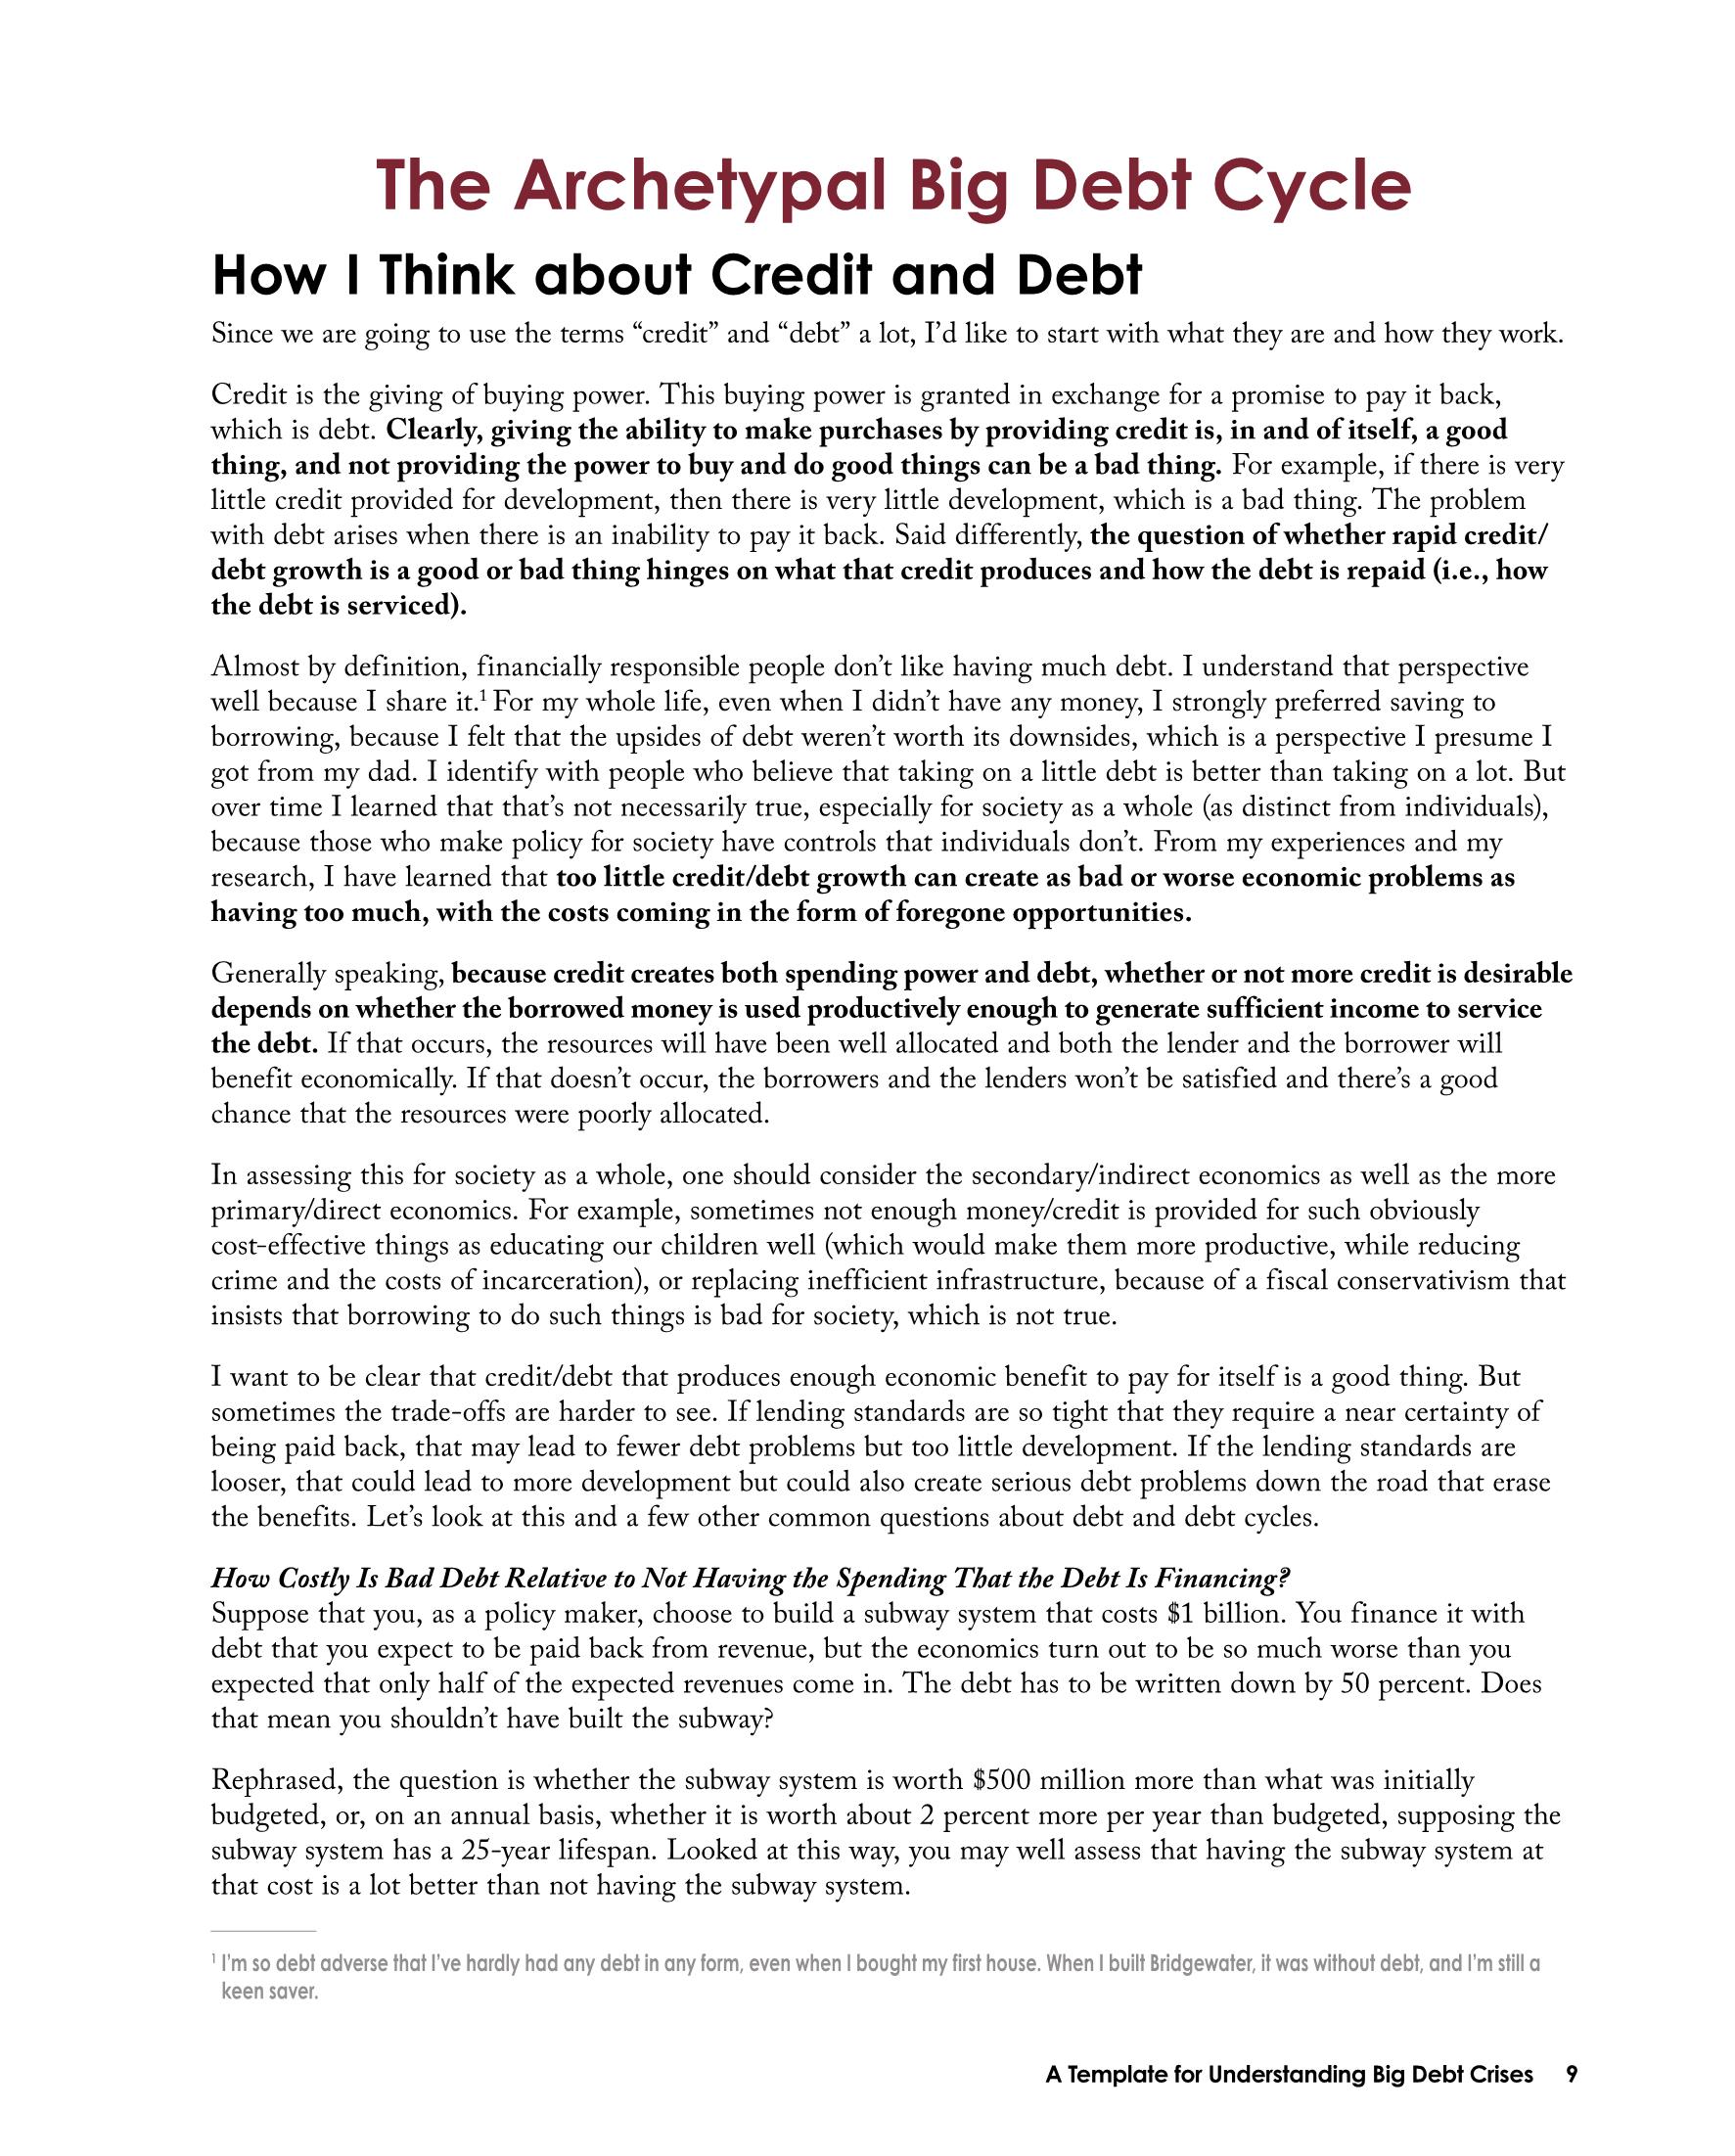 a template for understanding big debt crises pdf download